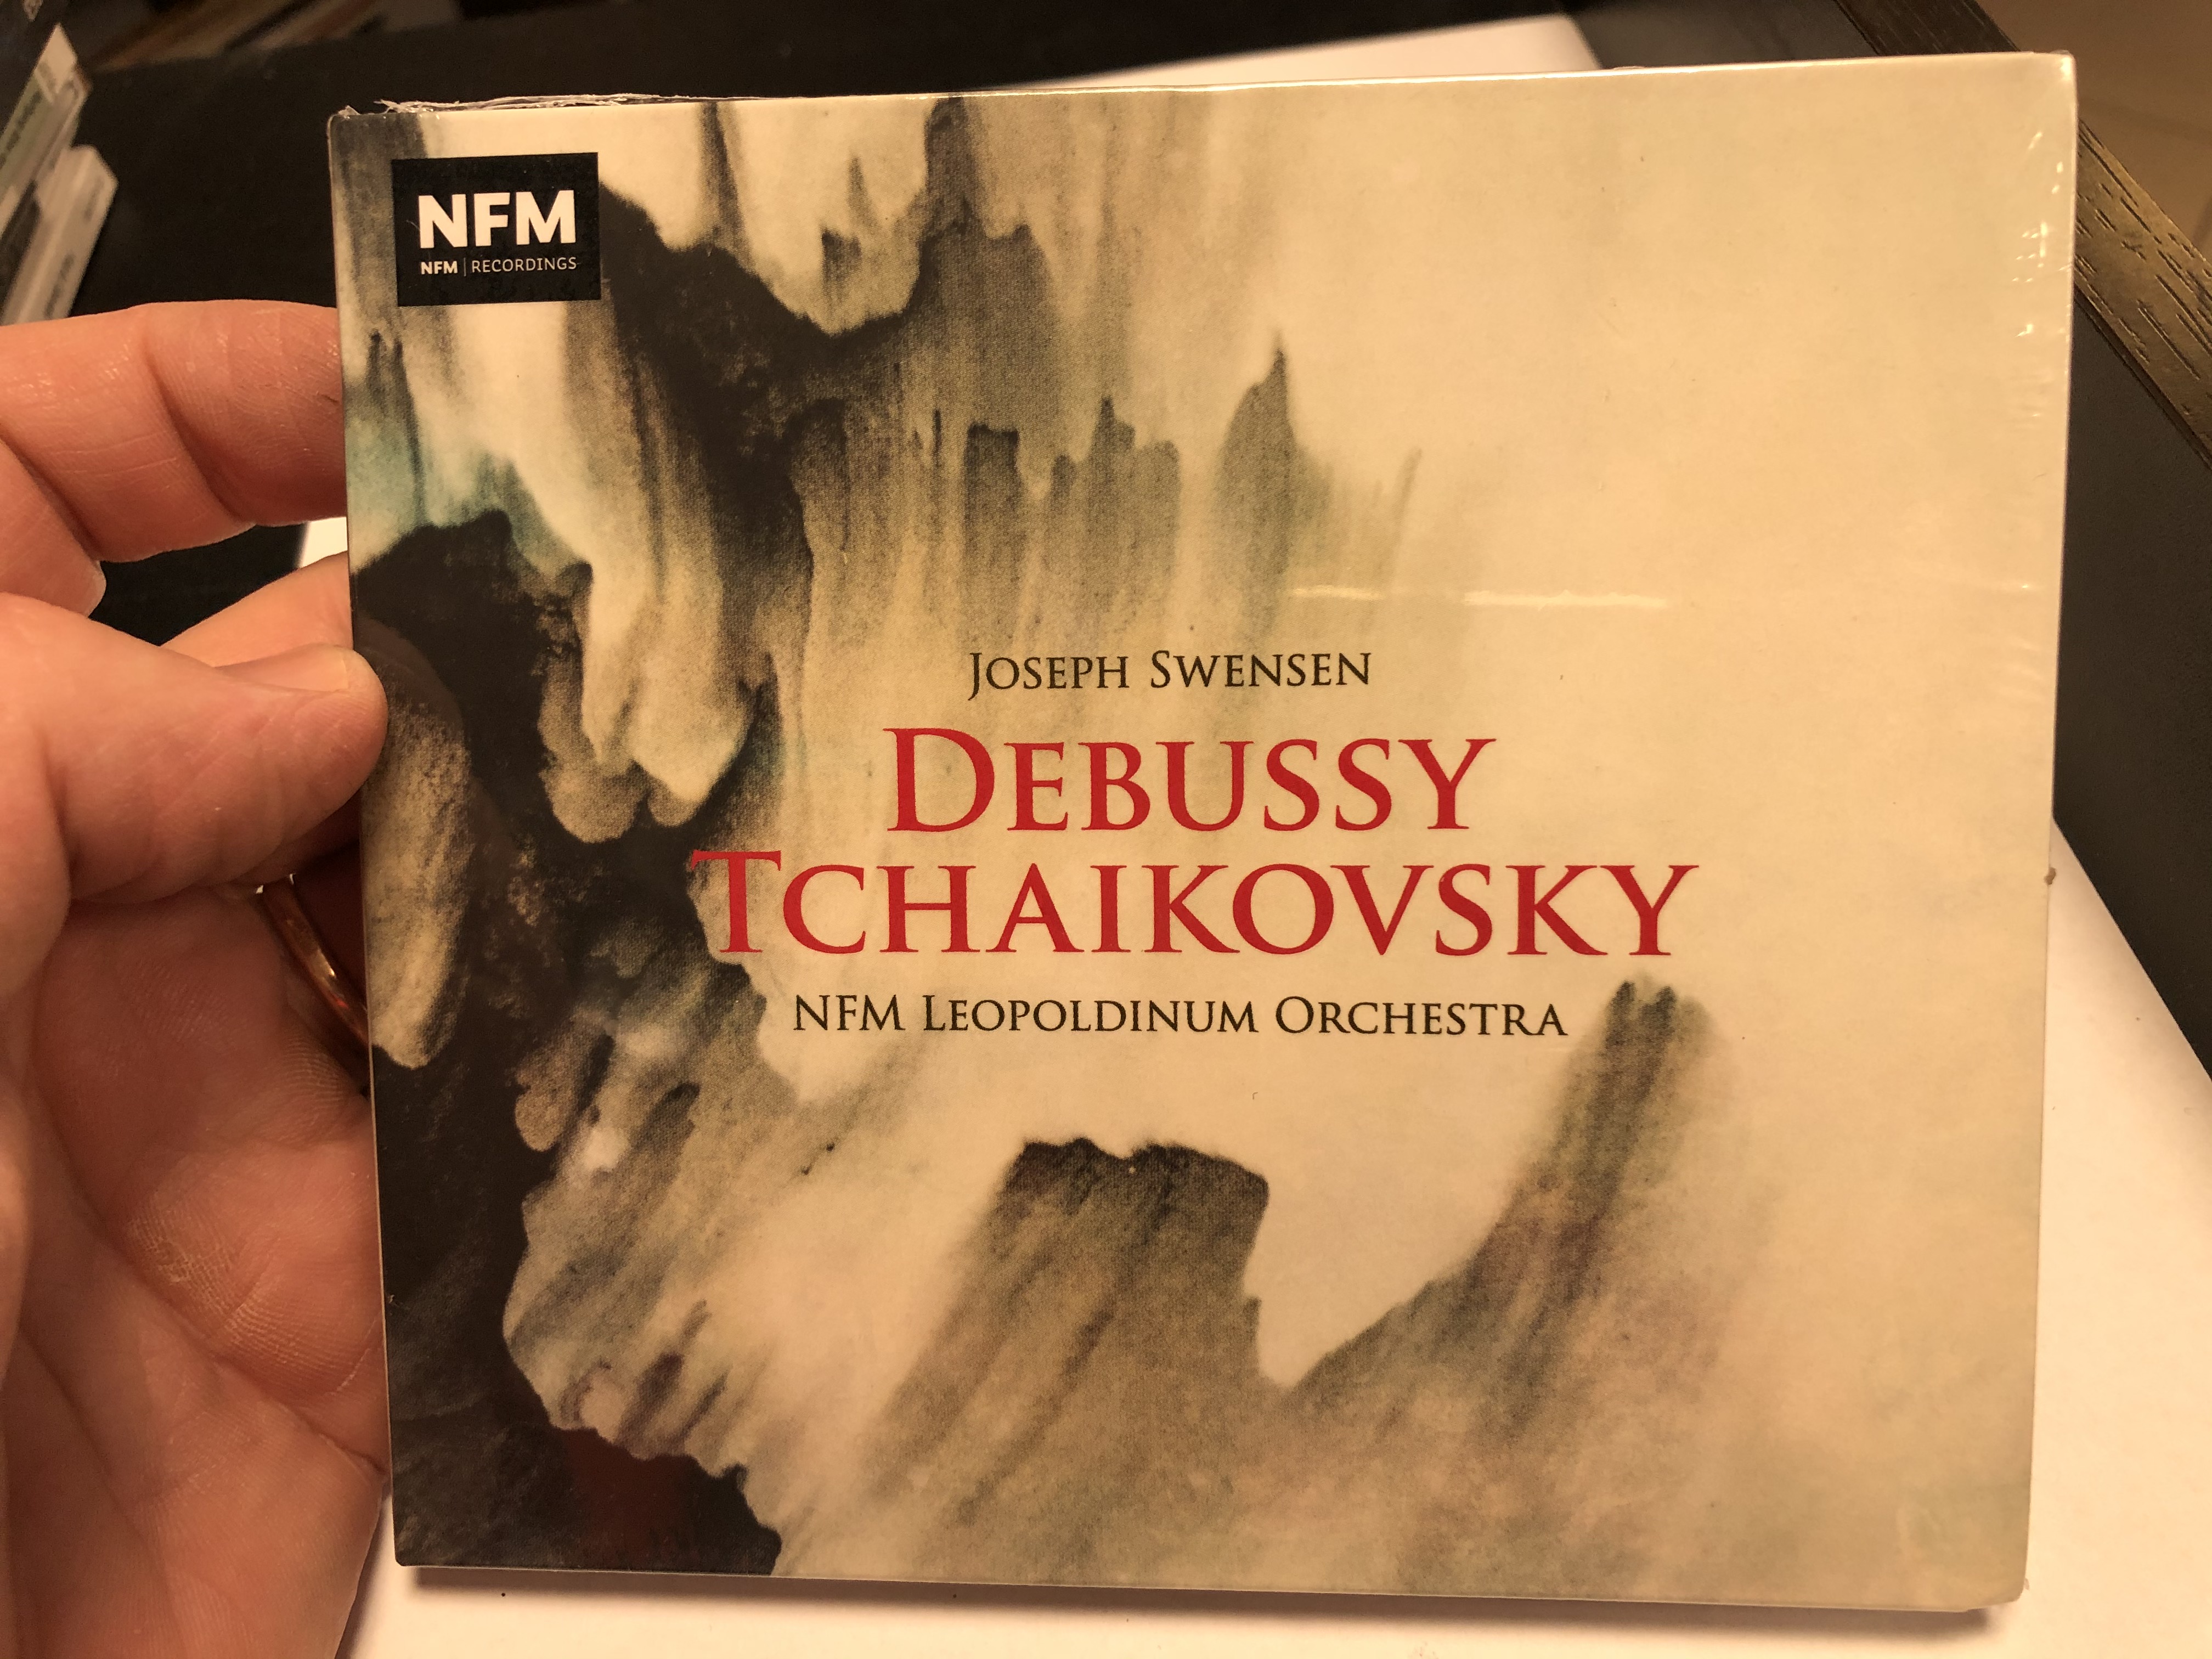 joseph-swensen-debussy-tchaikovsky-nfm-leopoldinum-orchestra-accord-audio-cd-acd-271-2-1-.jpg